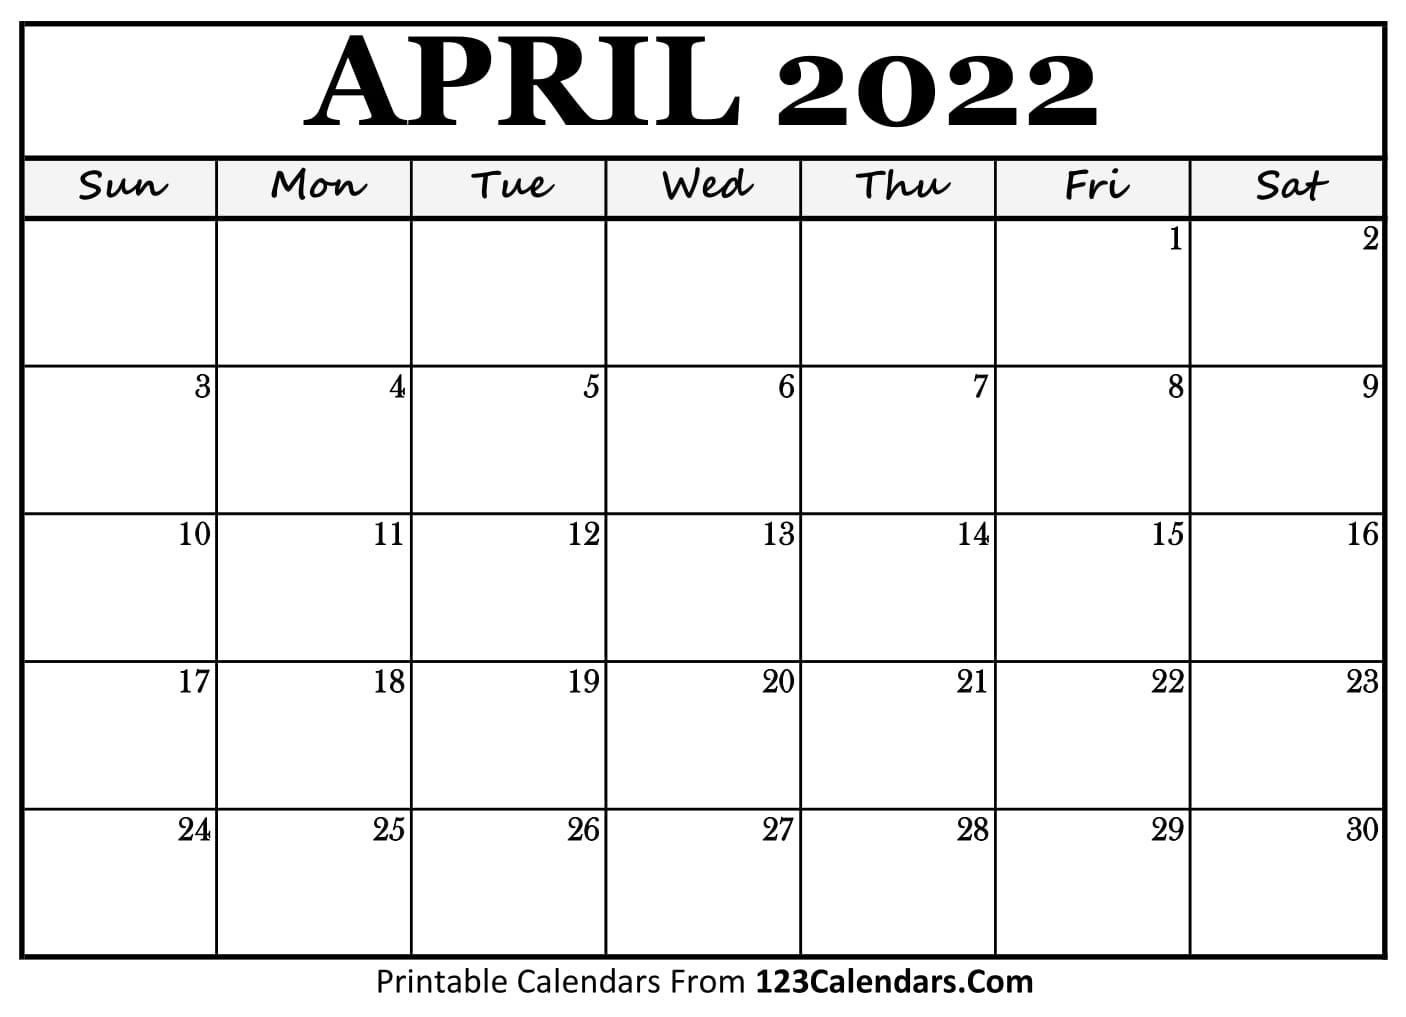 Print April 2022 Calendar Printable April 2022 Calendar Templates - 123Calendars.com